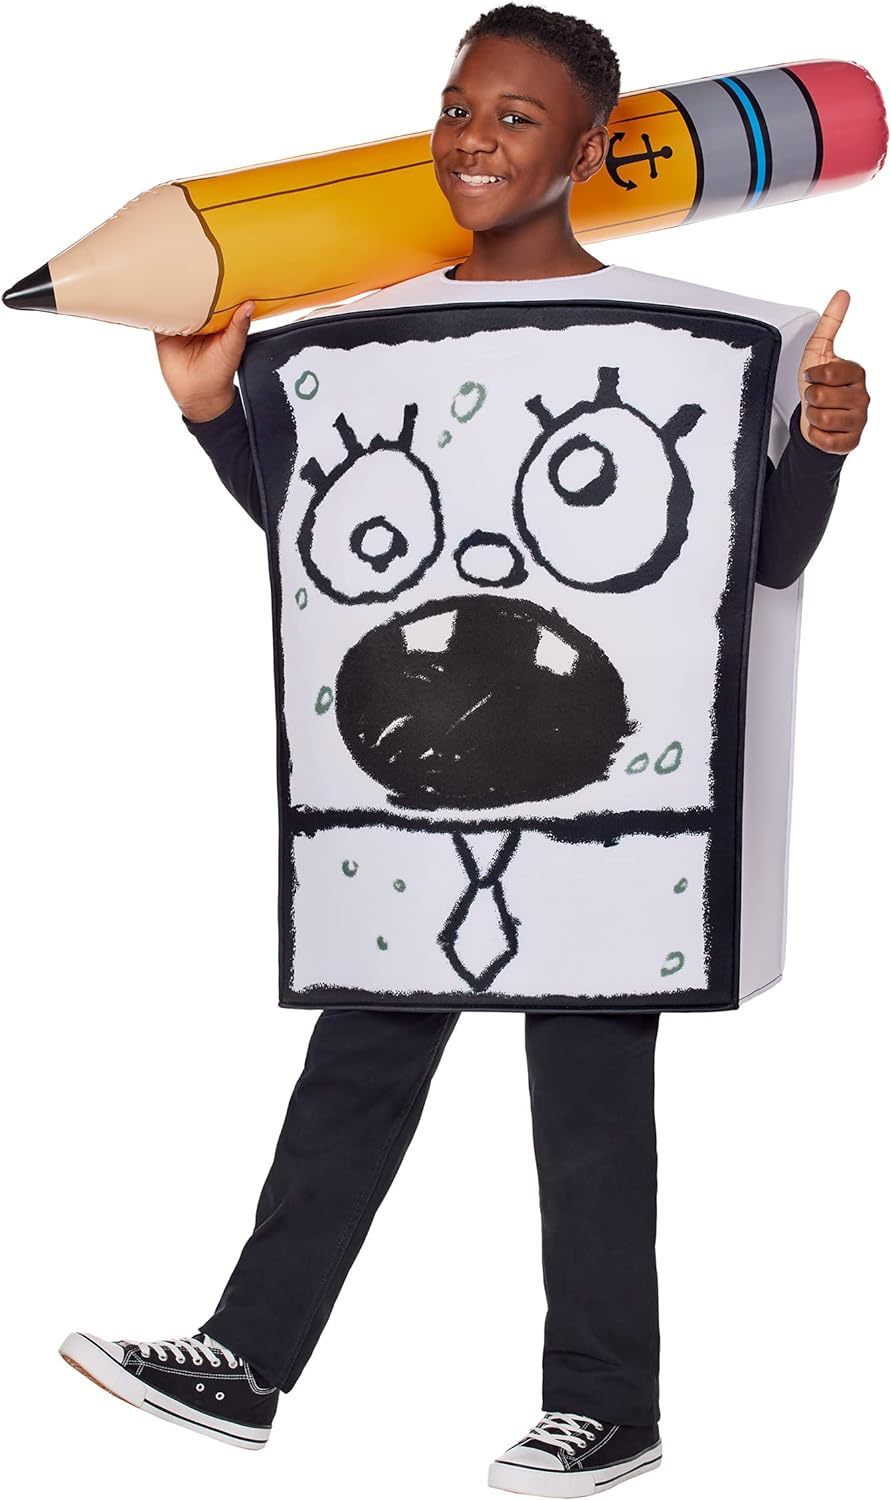 Spirit Halloween SpongeBob SquarePants Kids DoodleBob Costume | Officially Licensed | Group Costumes | SpongeBob Costumes